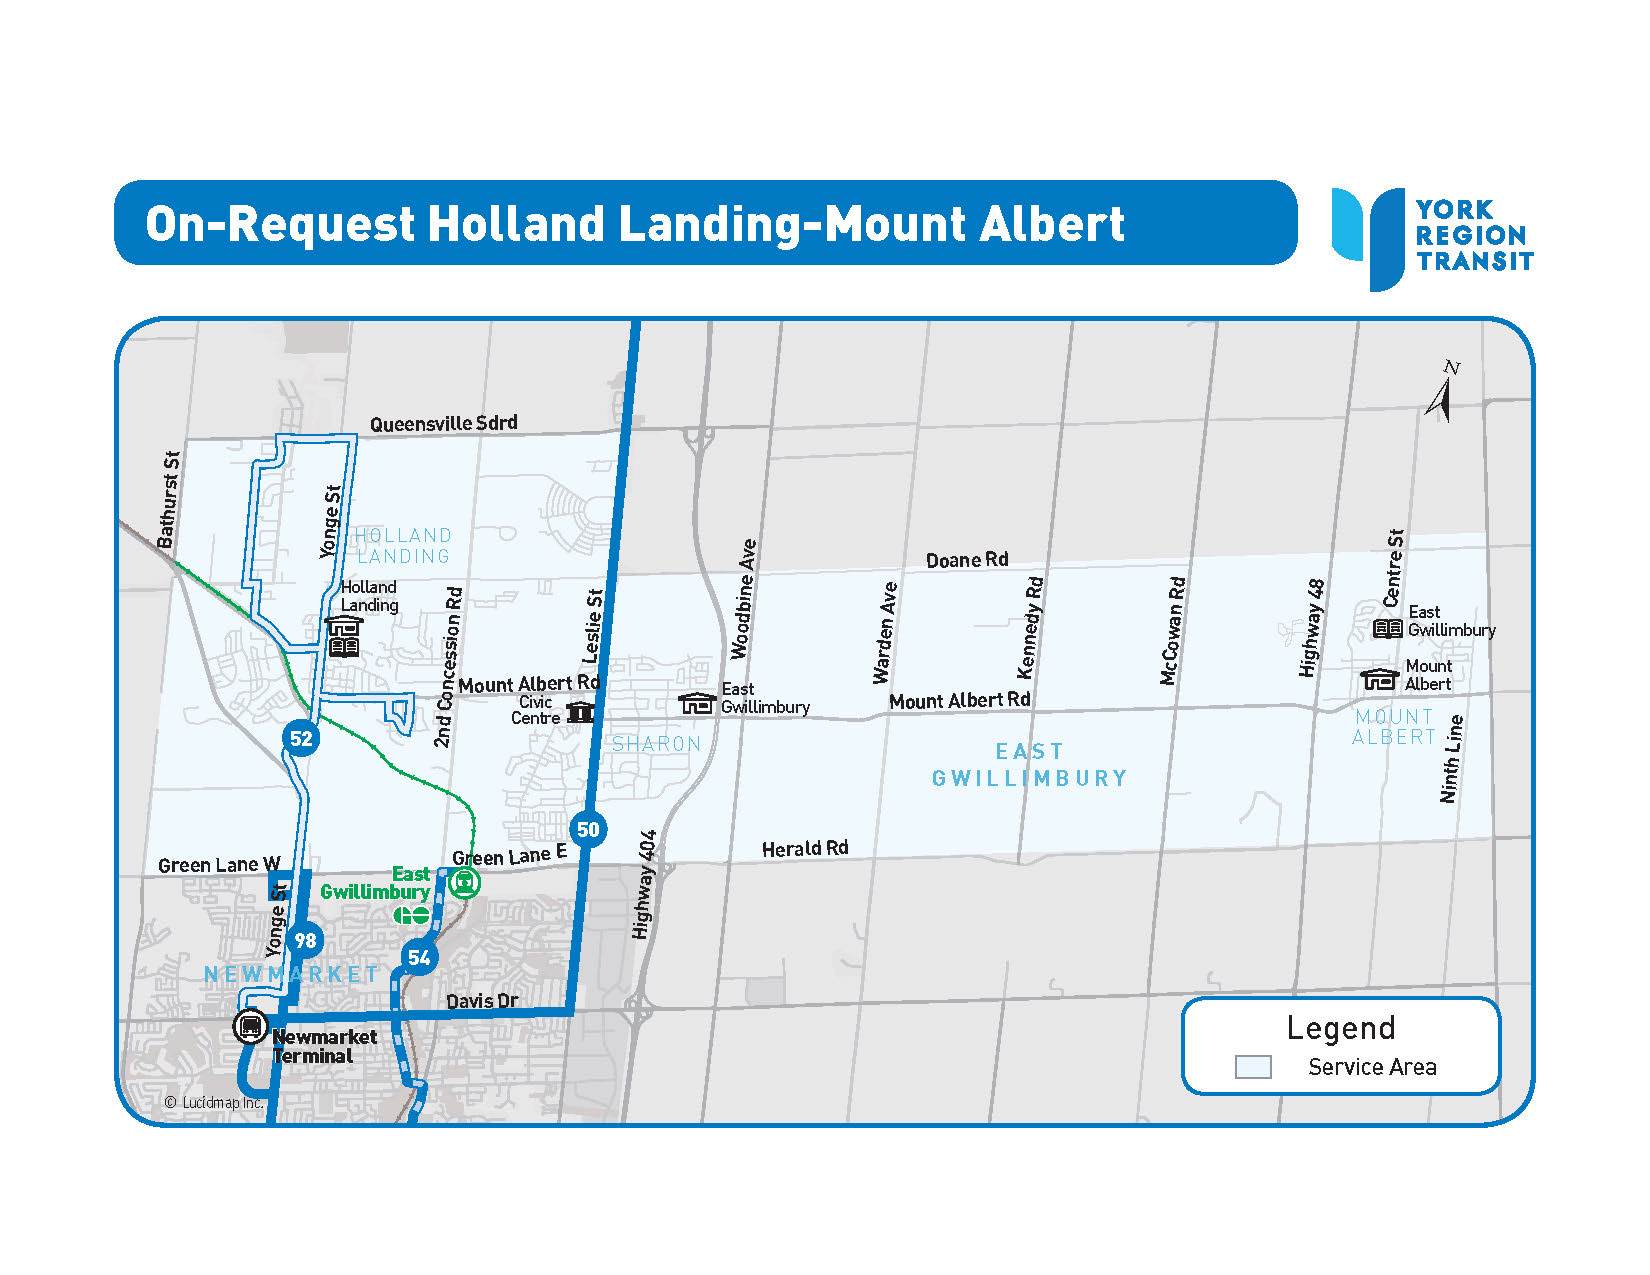 On-Request Holland Landing-Mount Albert service area map